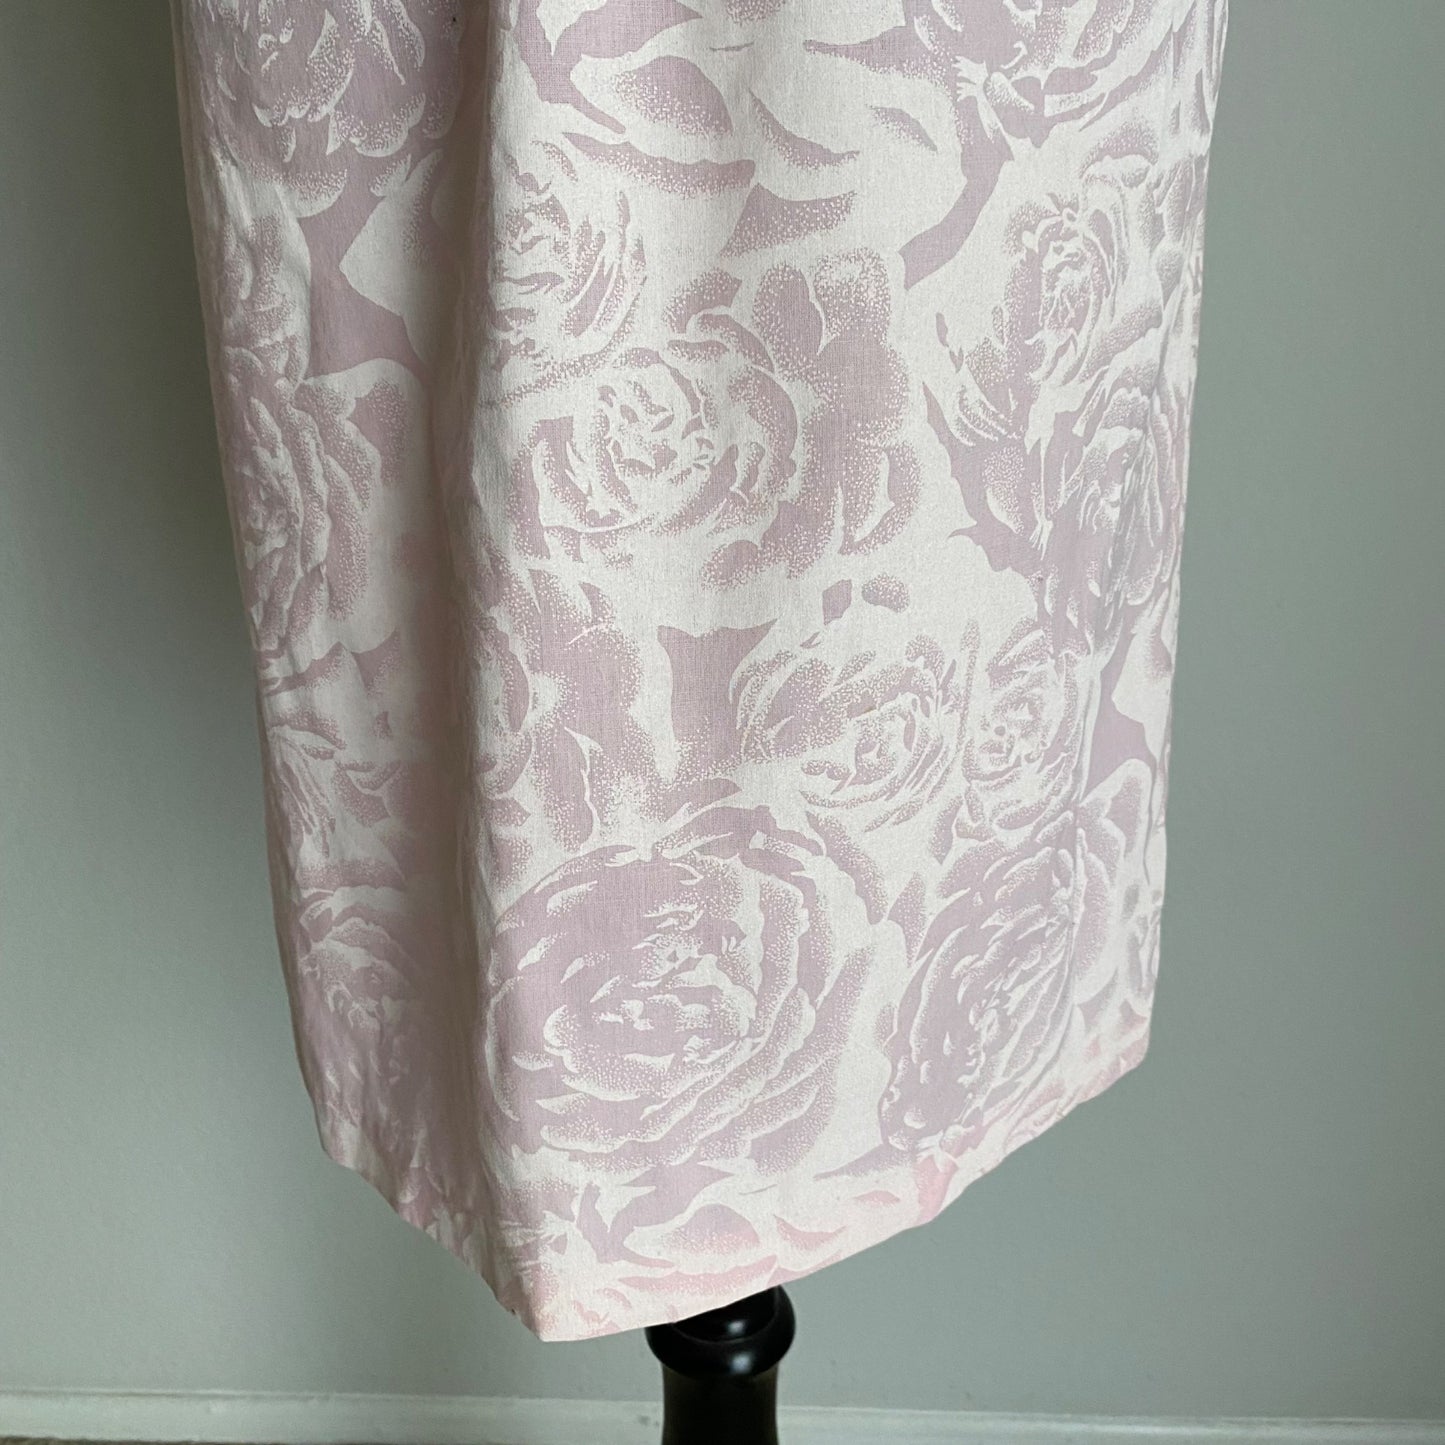 Vintage sz M floral pencil elastic waist paisley midi skirt